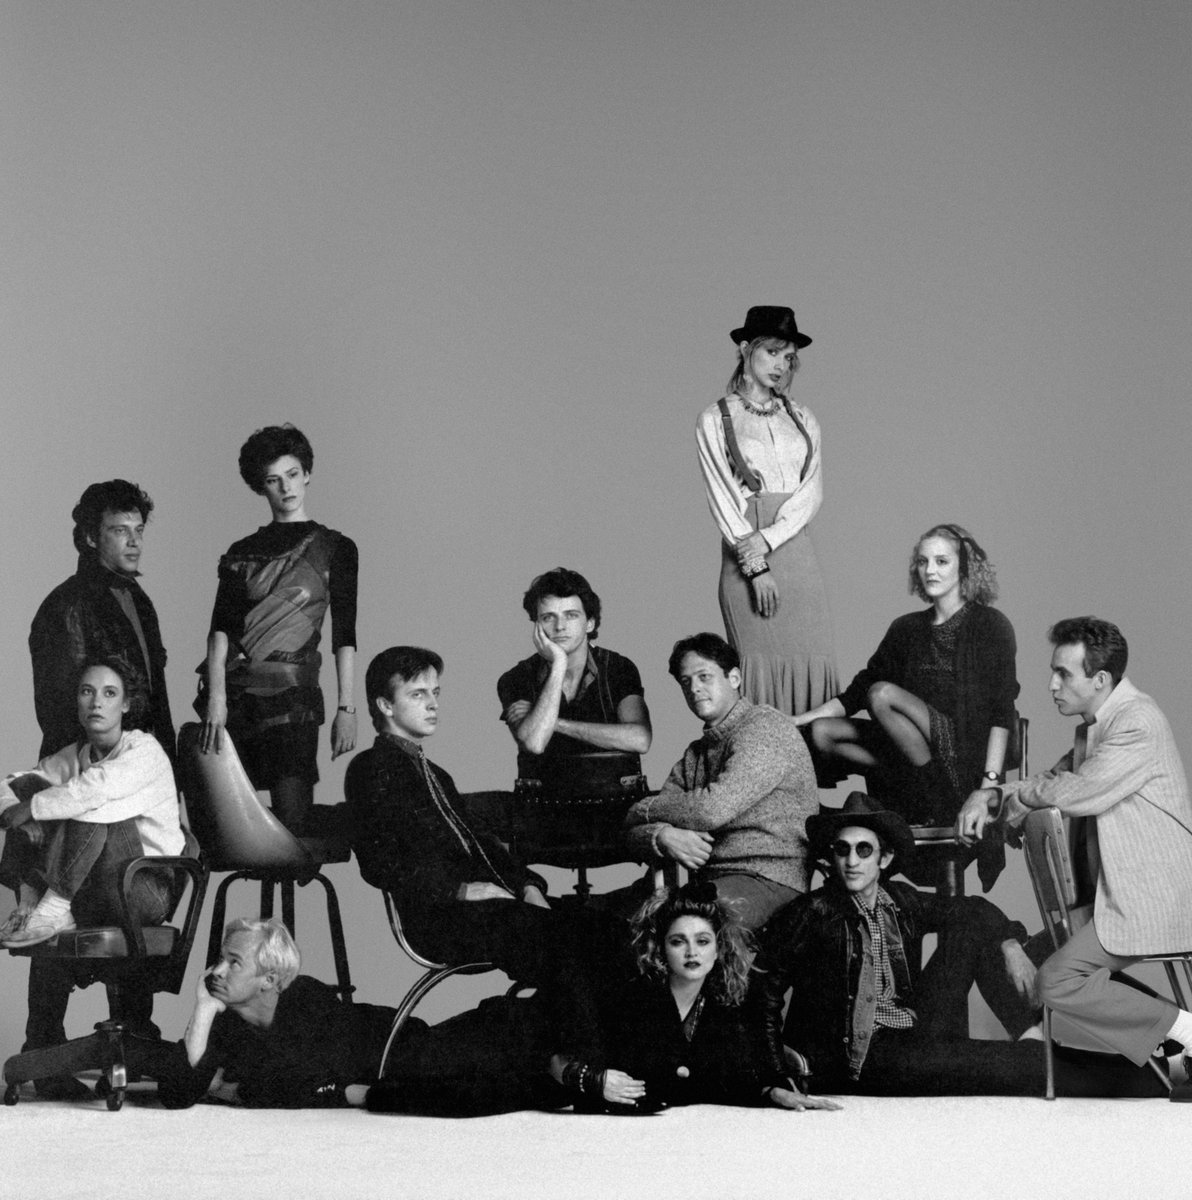 DESPERATELY SEEKING SUSAN 2/2
Unreleased cast photo by R. Corman.
Original black & white shots.
#LaurieMetcalf #AidanQuinn #RosannaArquette #Madonna #MarkBlum #AnnaLevine #JohnTurturro #SusanSeidelman #DSS #Cast #Promo #Corman @MattRett @NewsOfM @M_Scrapbook @Xeynuraf